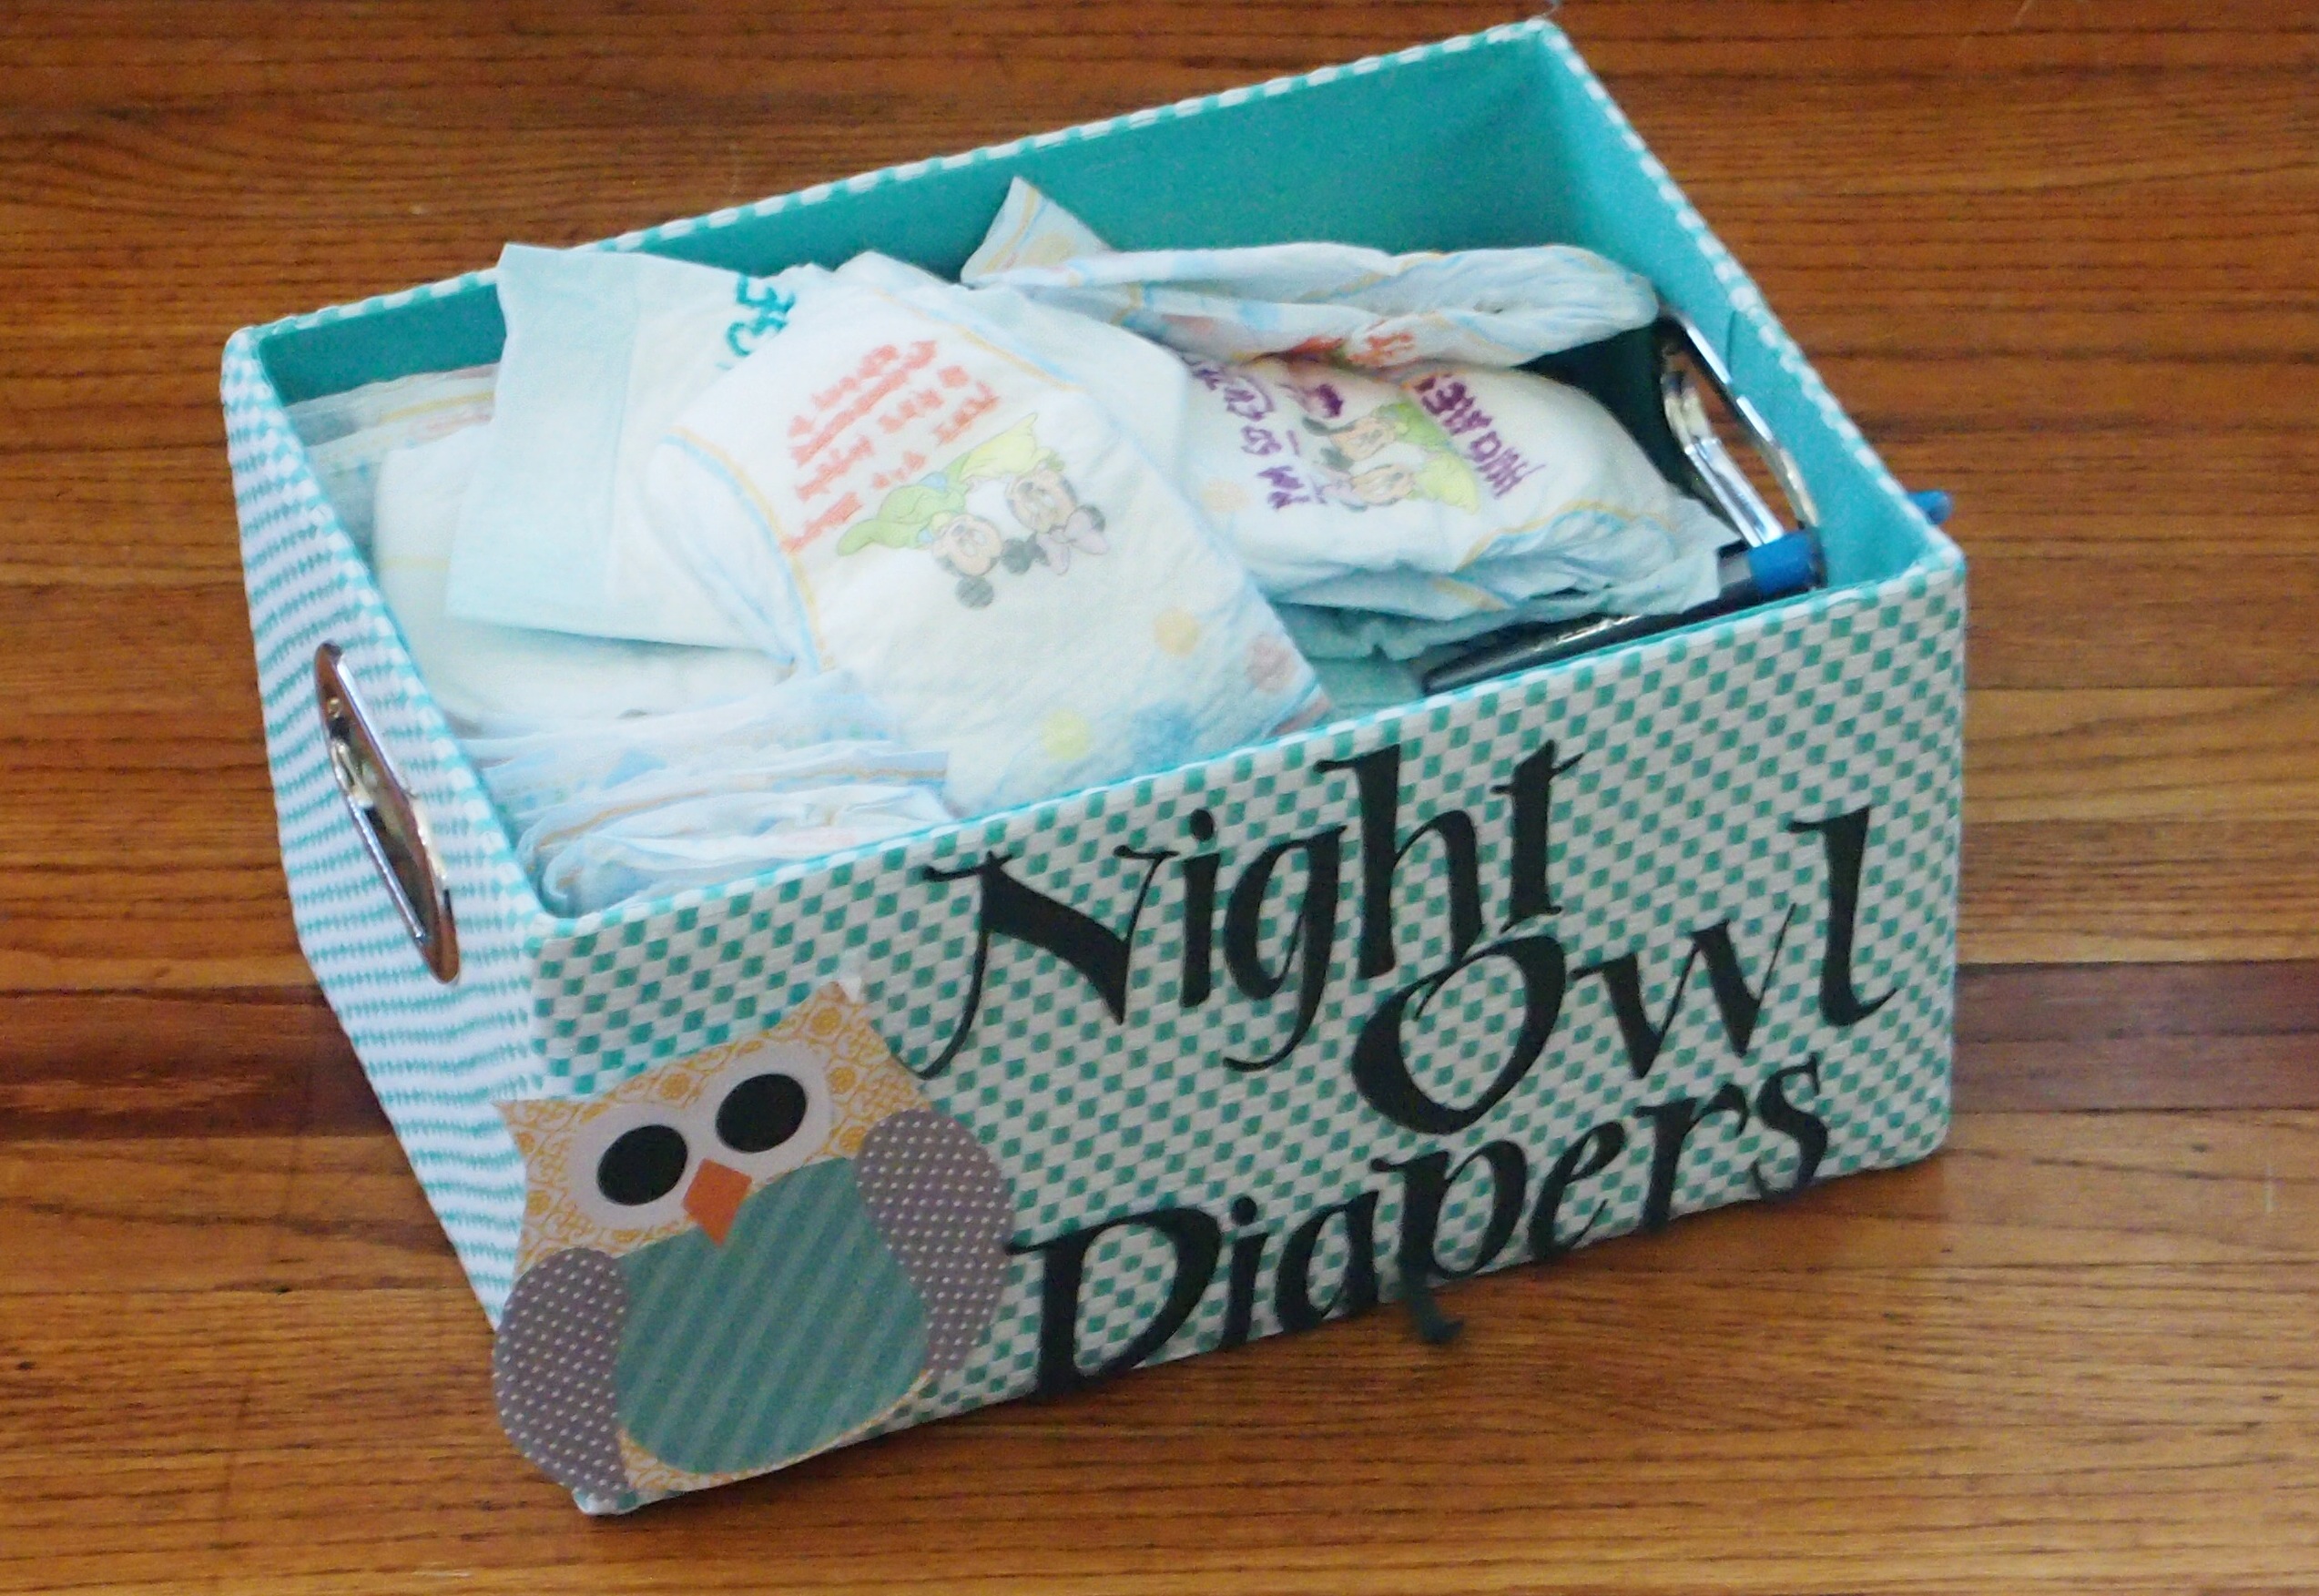 Nighttime Diaper Box